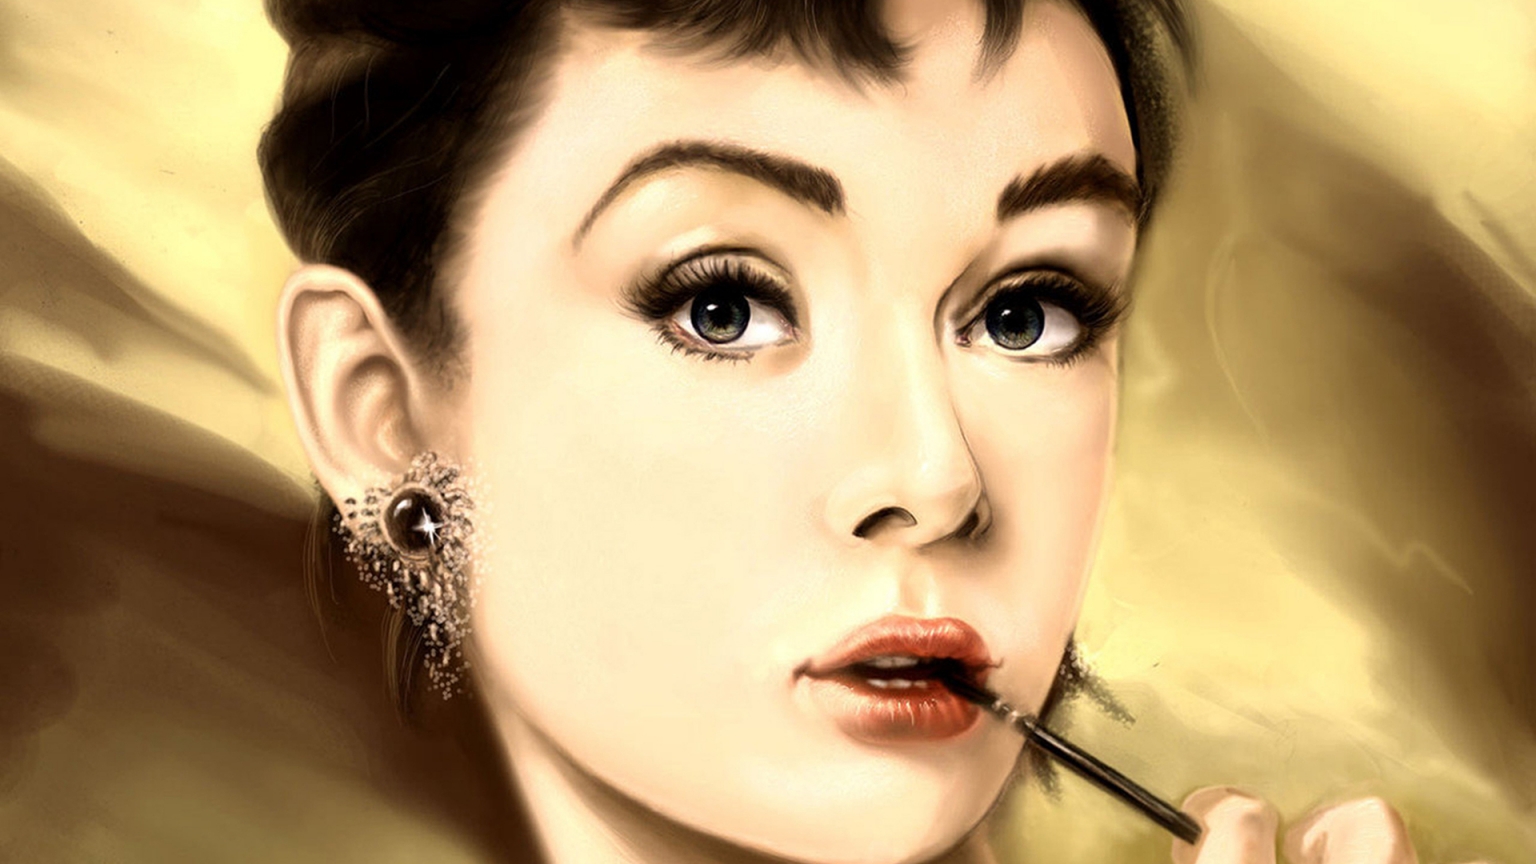 Audrey Hepburn Portrait Painting for 1536 x 864 HDTV resolution